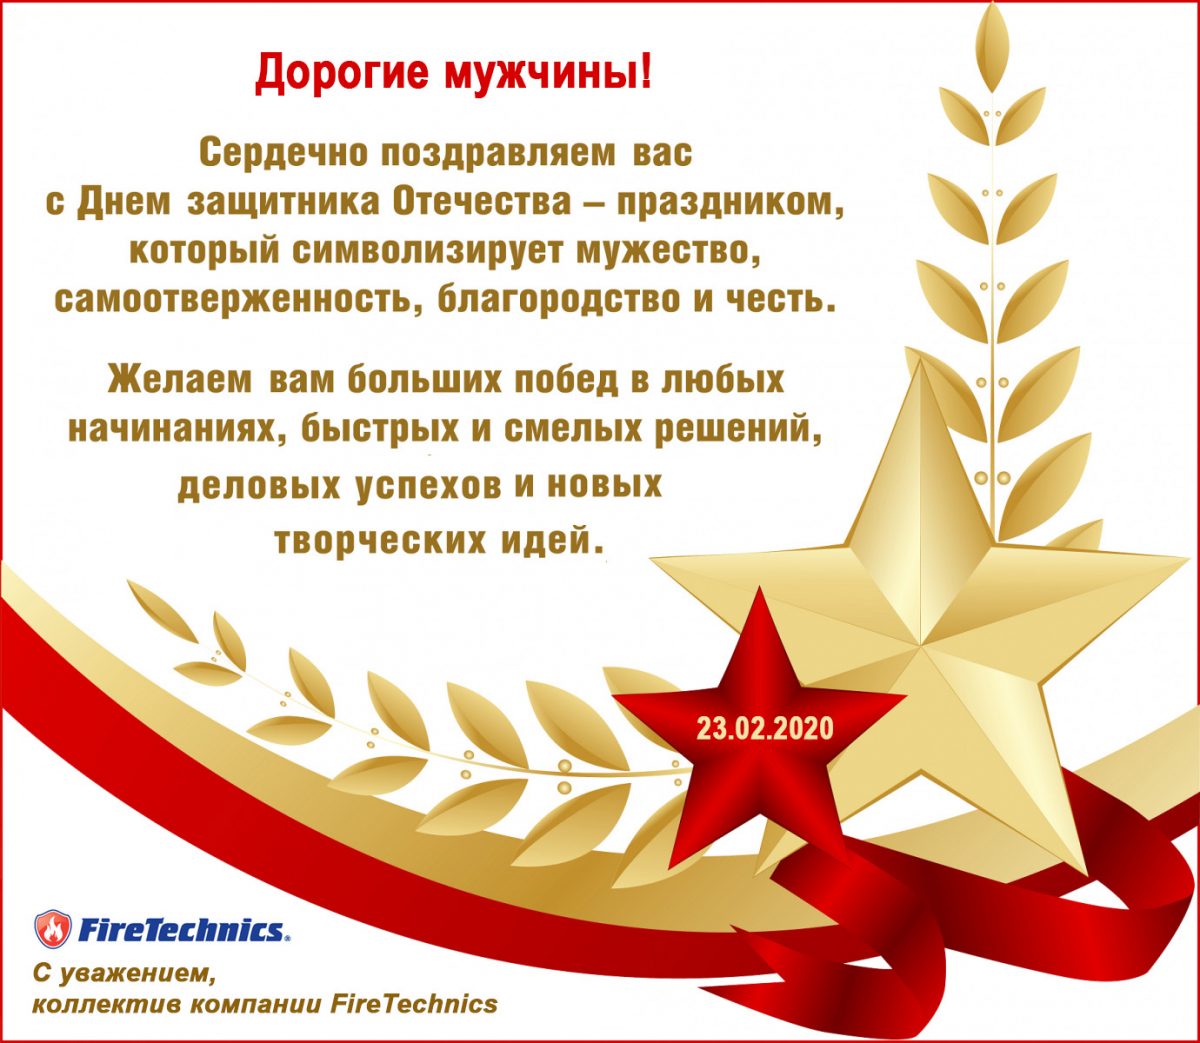 С праздником 23 февраля от FireTechnics в Казахстане!